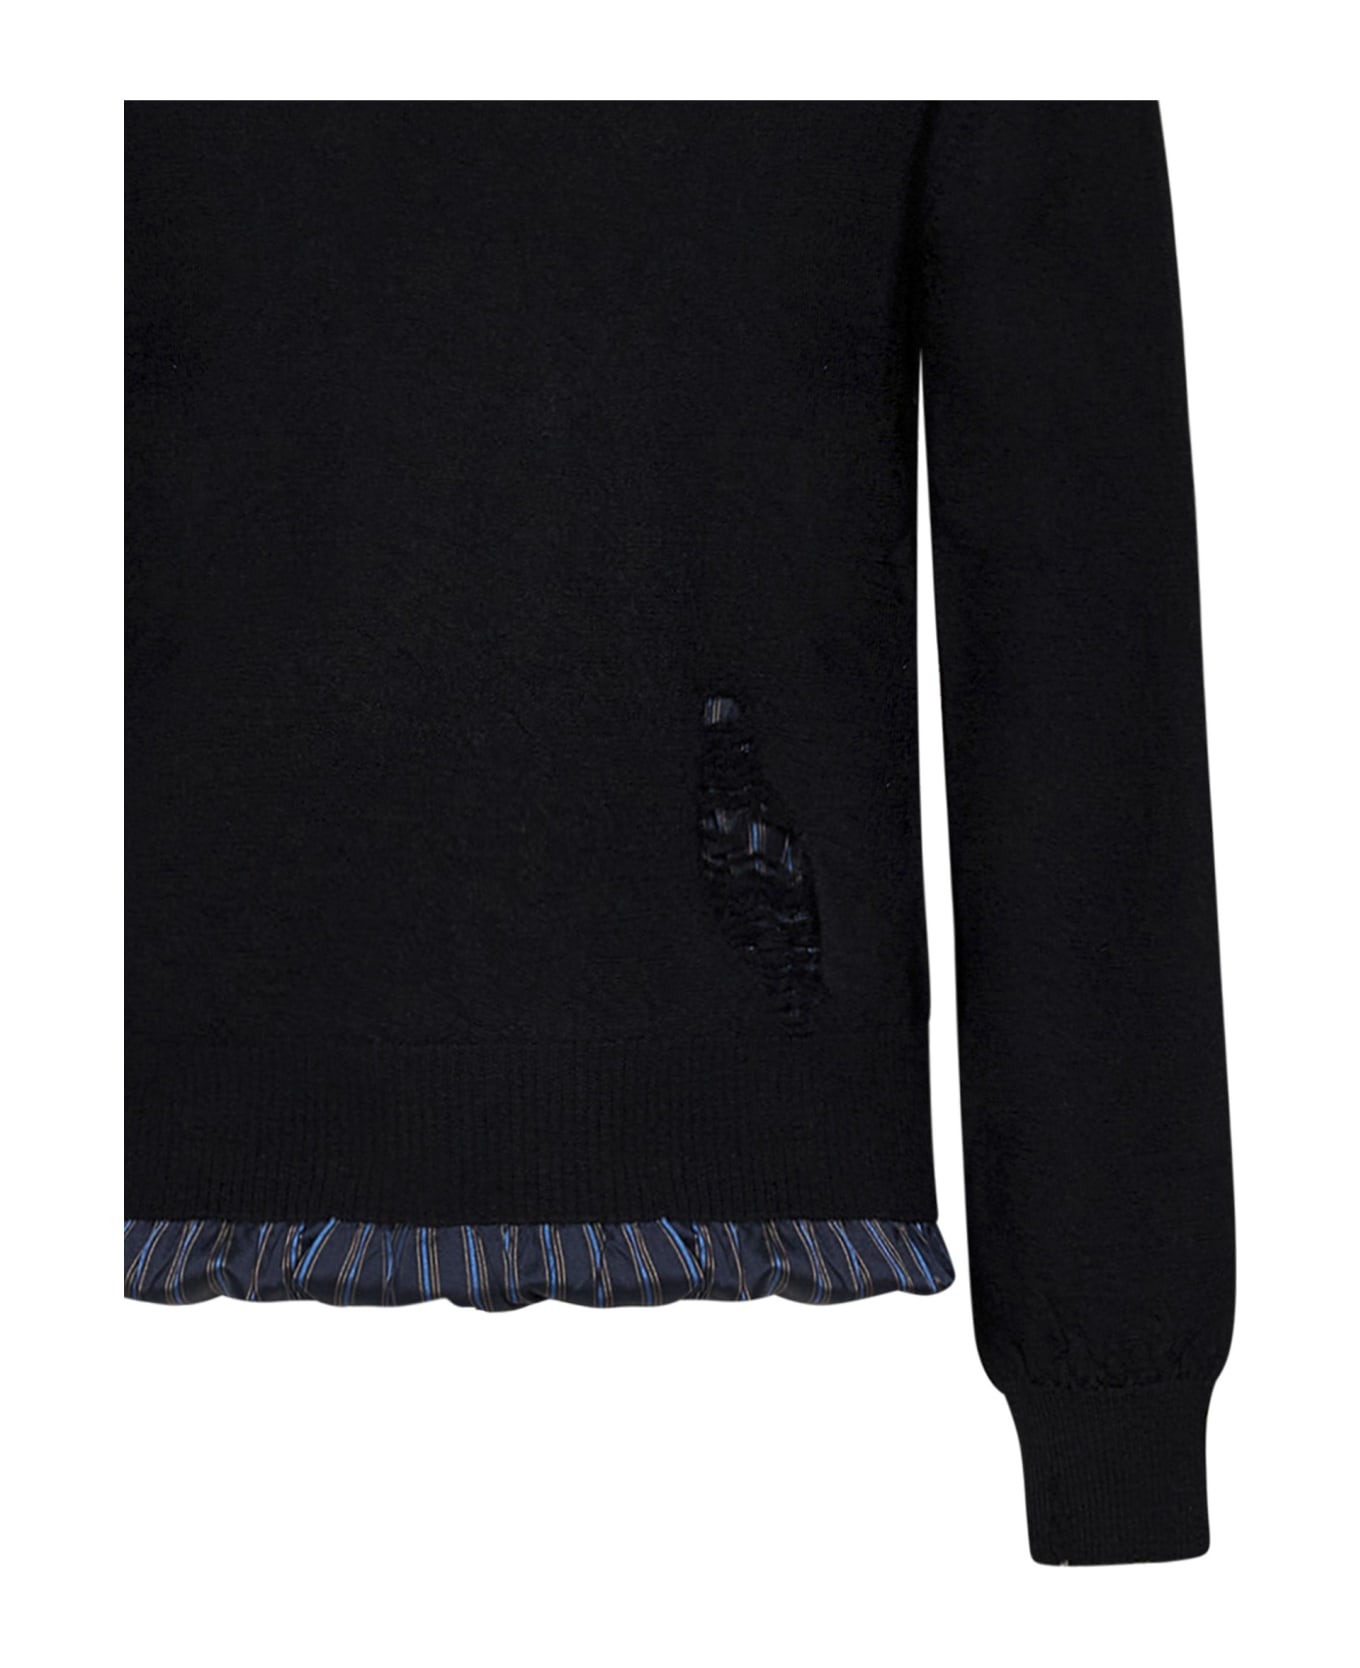 Maison Margiela Distressed Sweater - Black ニットウェア